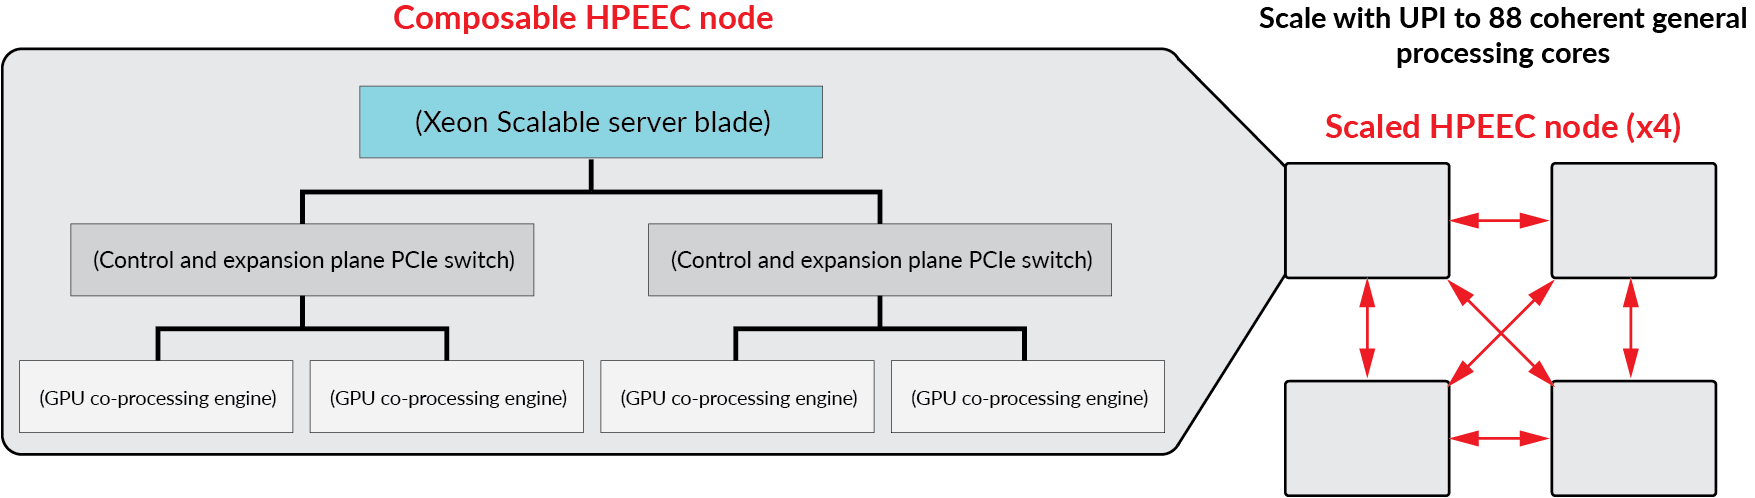 scaled-HPEEC-node-2.png